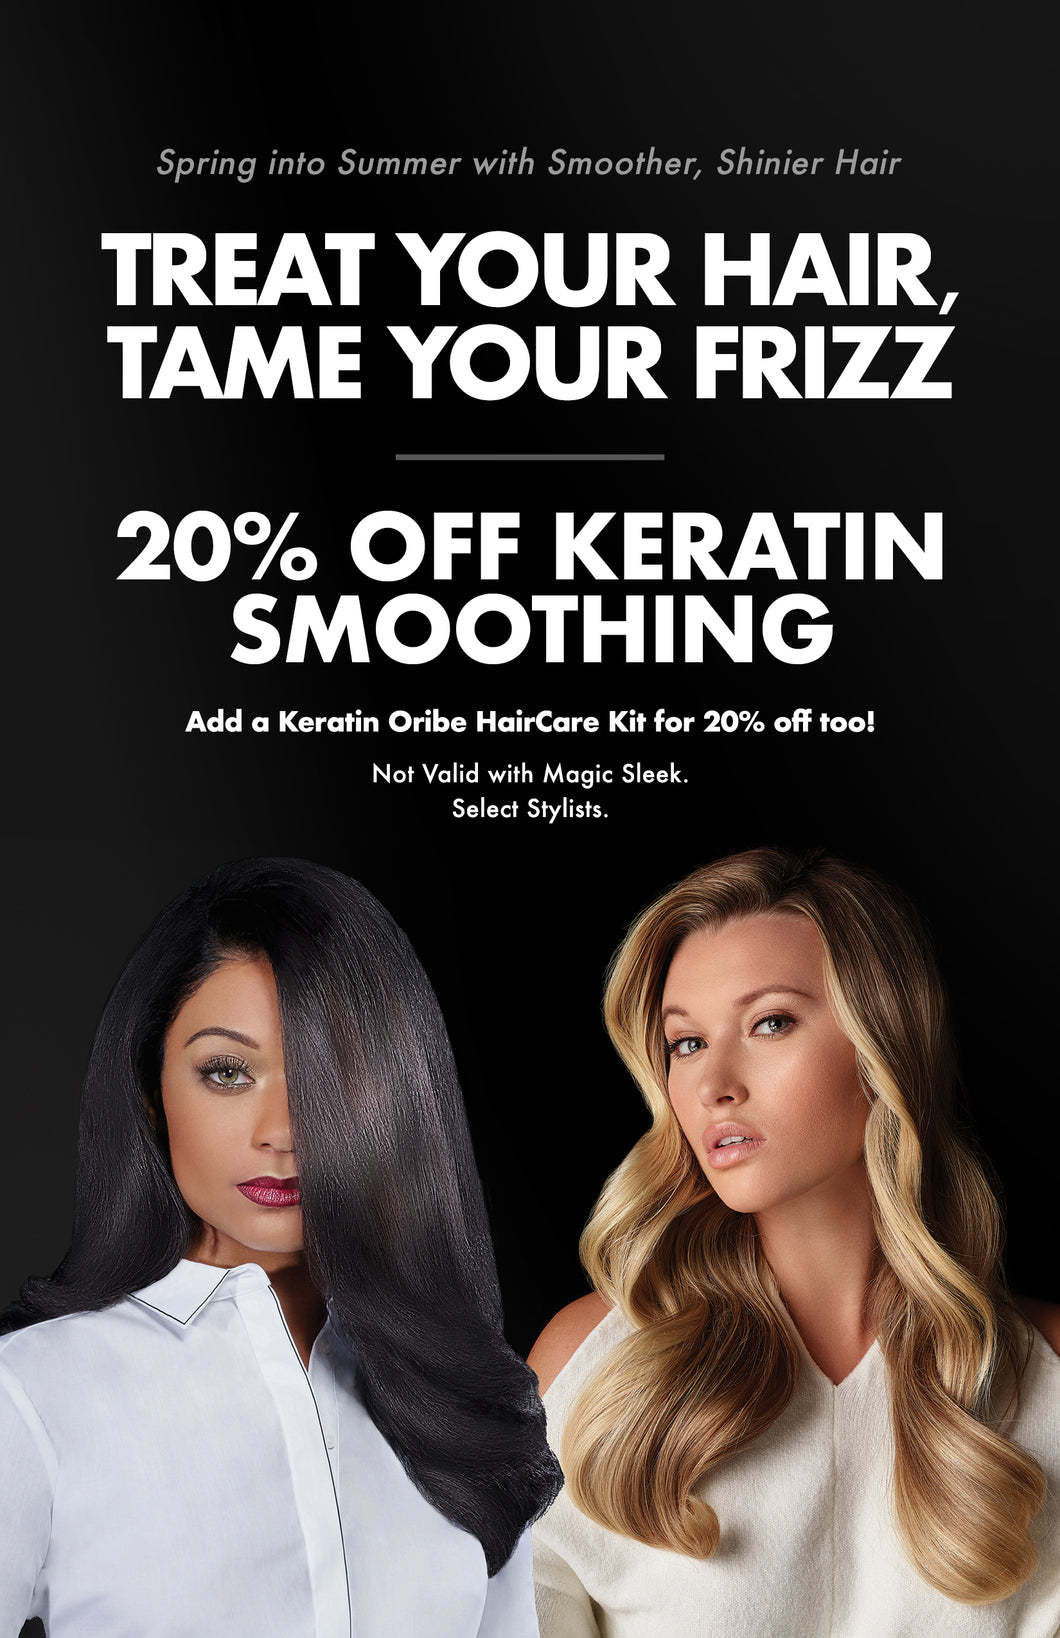 Buy 2 Keratin Smoothing Get 20% OFF (Senior Stylist)